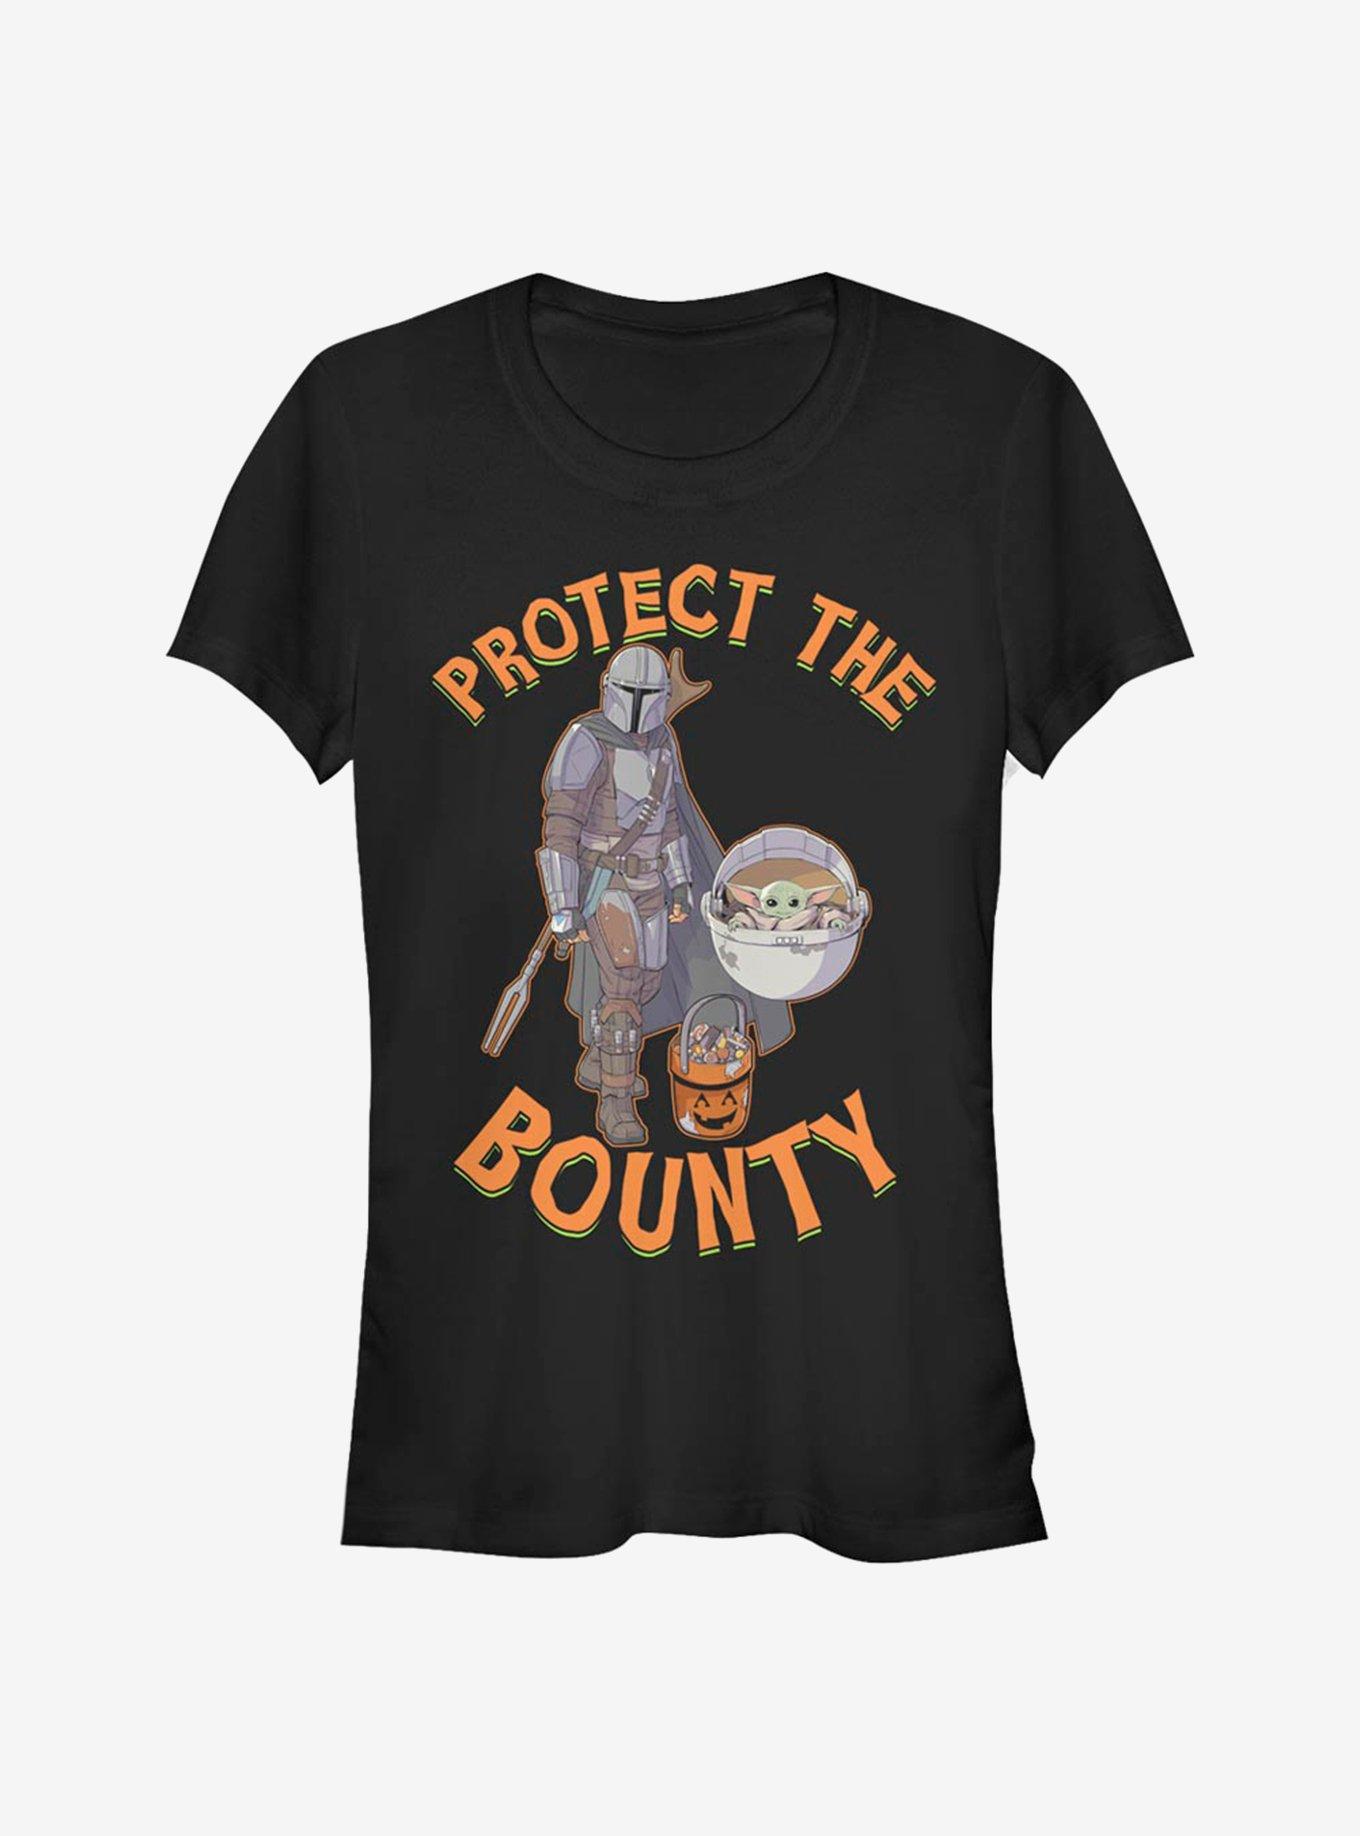 Star Wars The Mandalorian Protect Bounty Girls T-Shirt